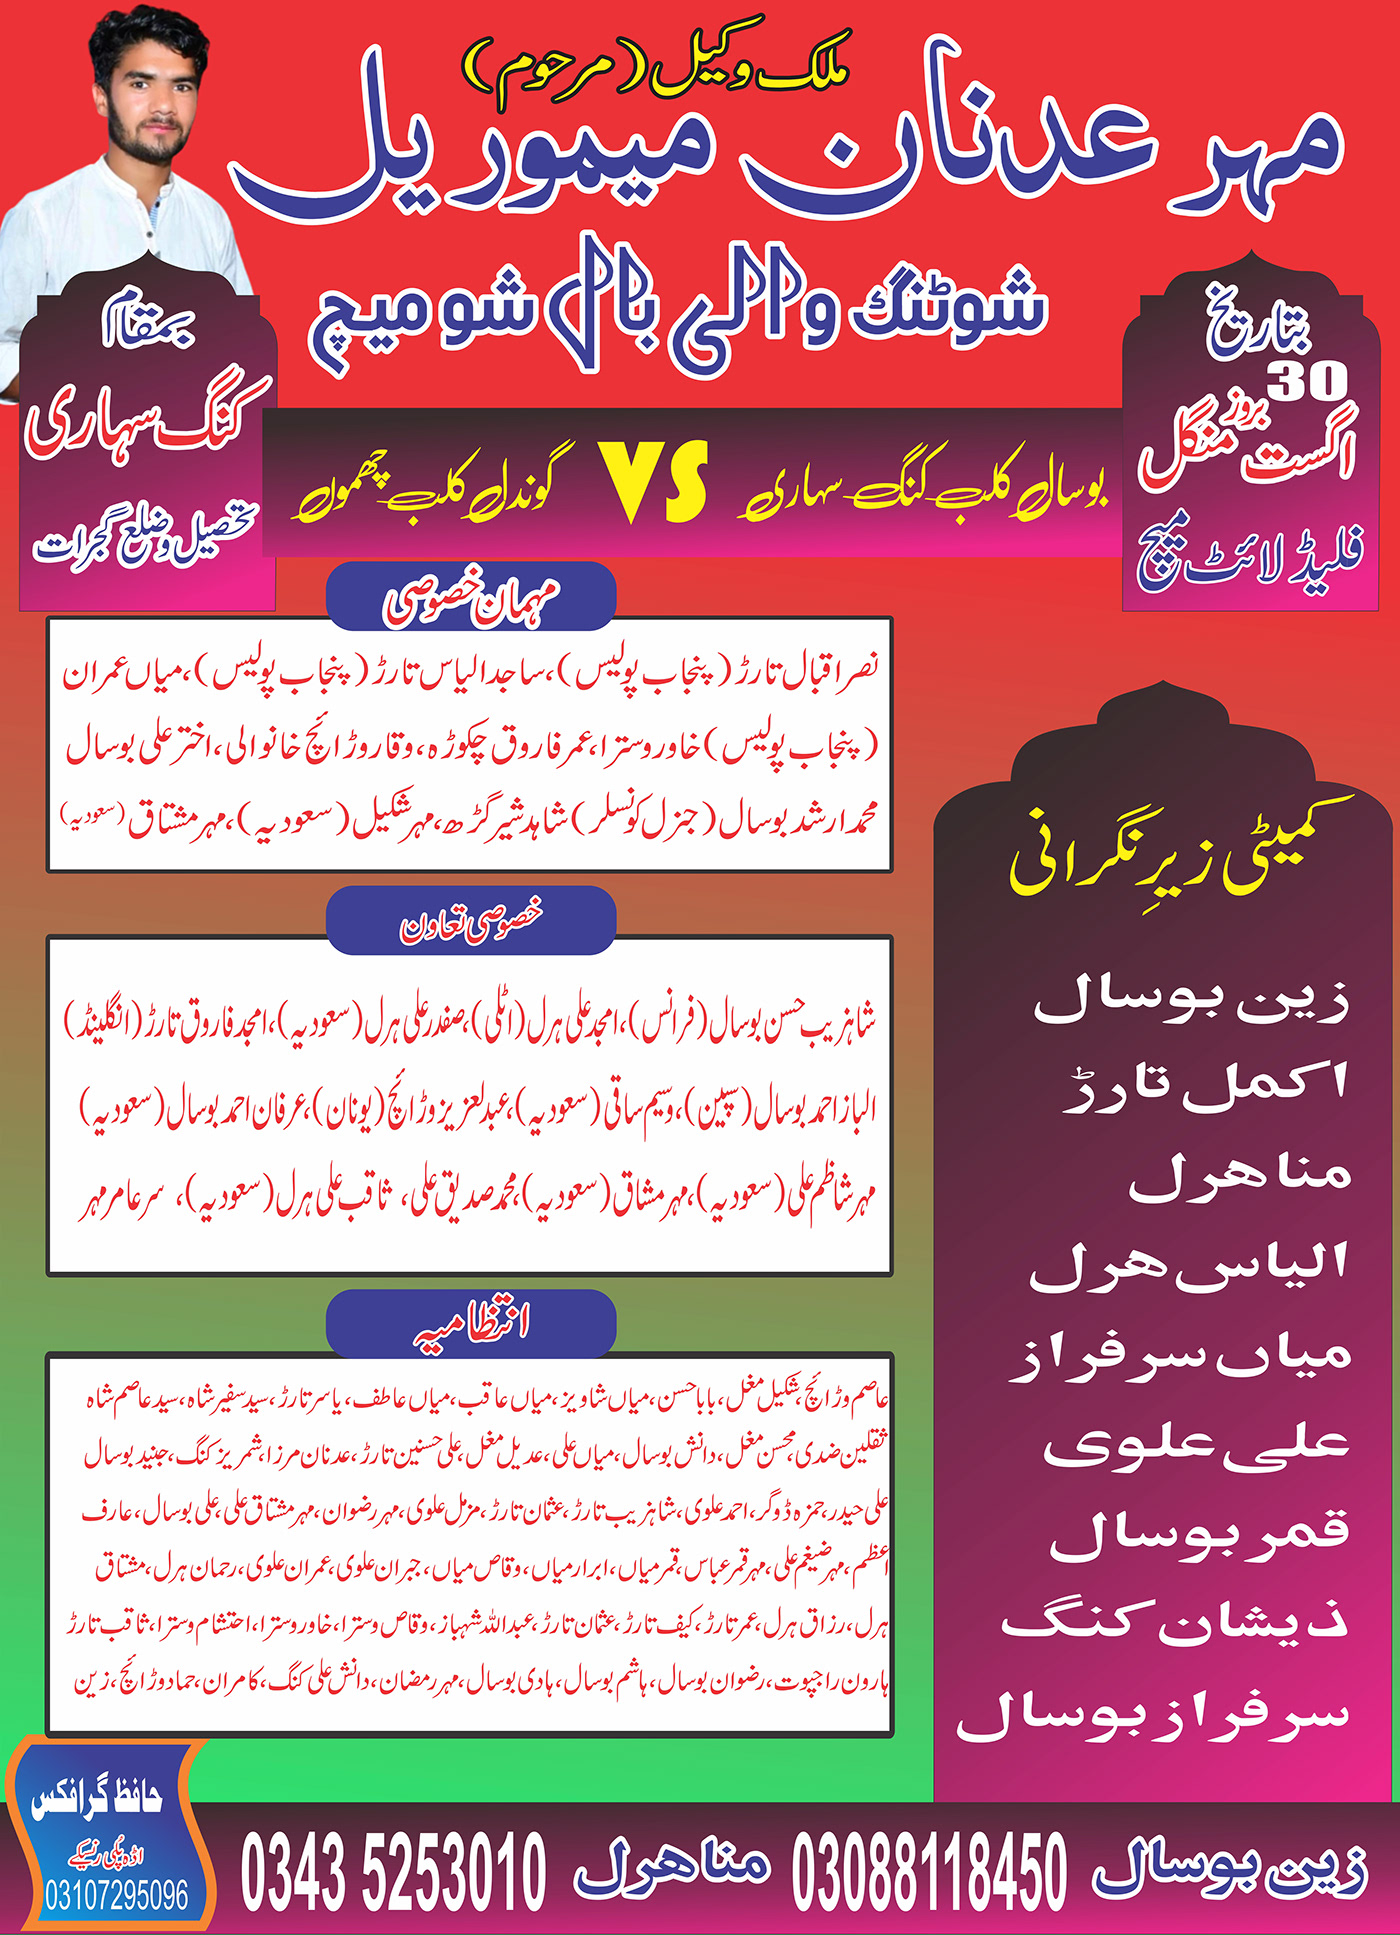 Advertising  gamespost marketing   matchposter poster Poster Design Socialmedia Urdu Logo Urdu Poster vollyball